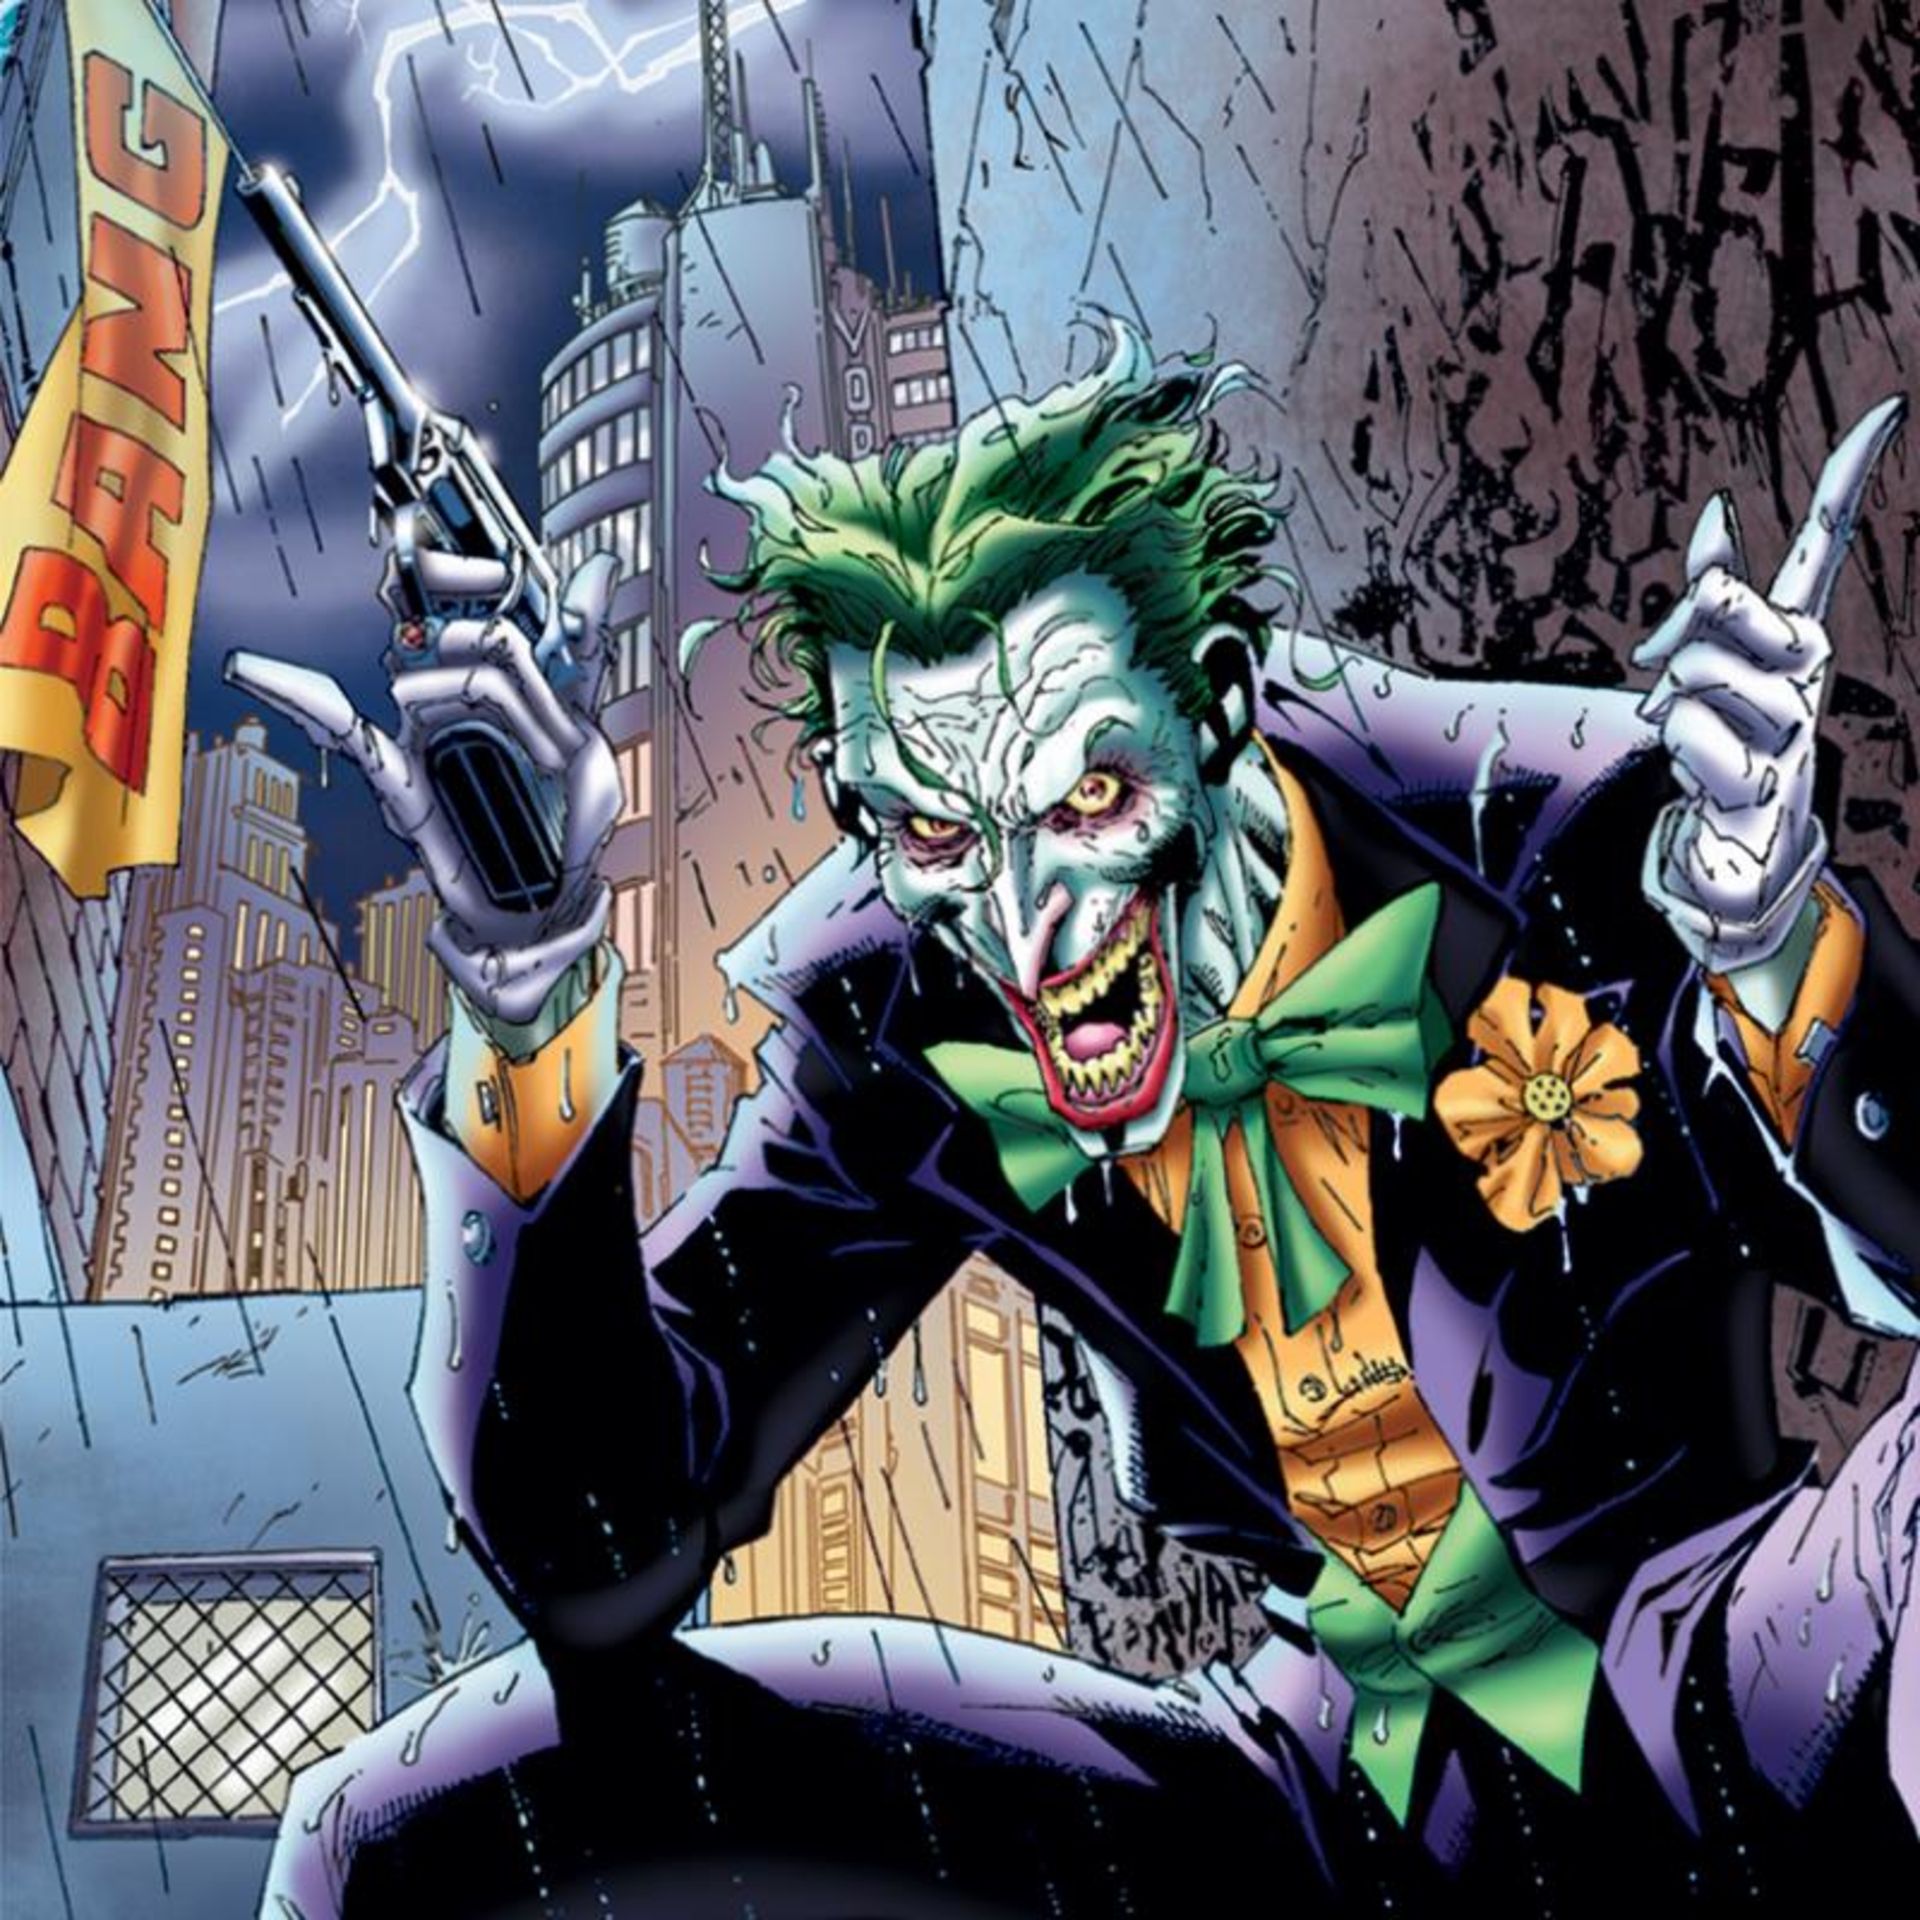 Joker by DC Comics - Image 2 of 2